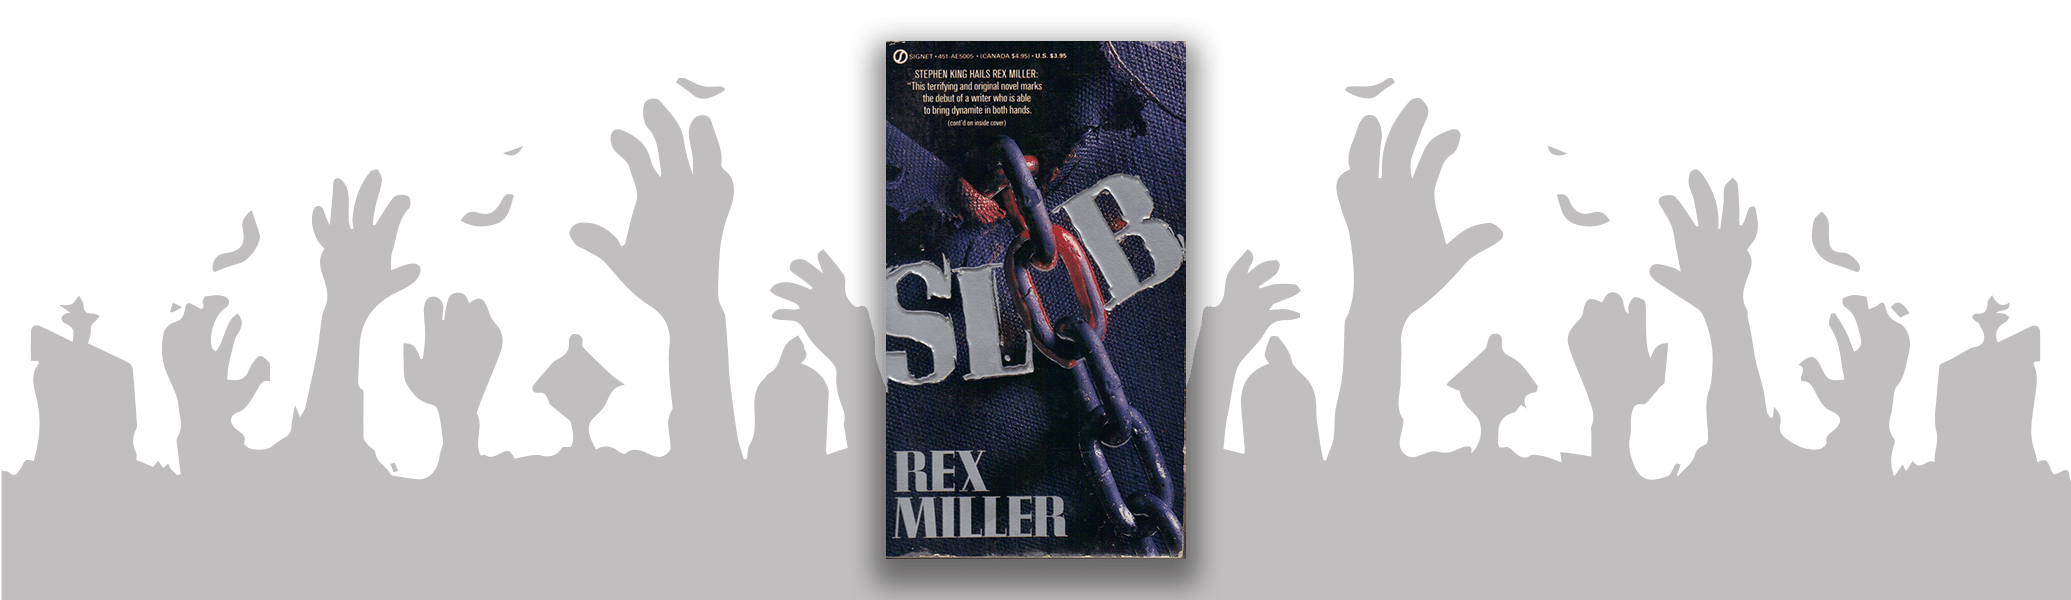 Slob by Rex Miller